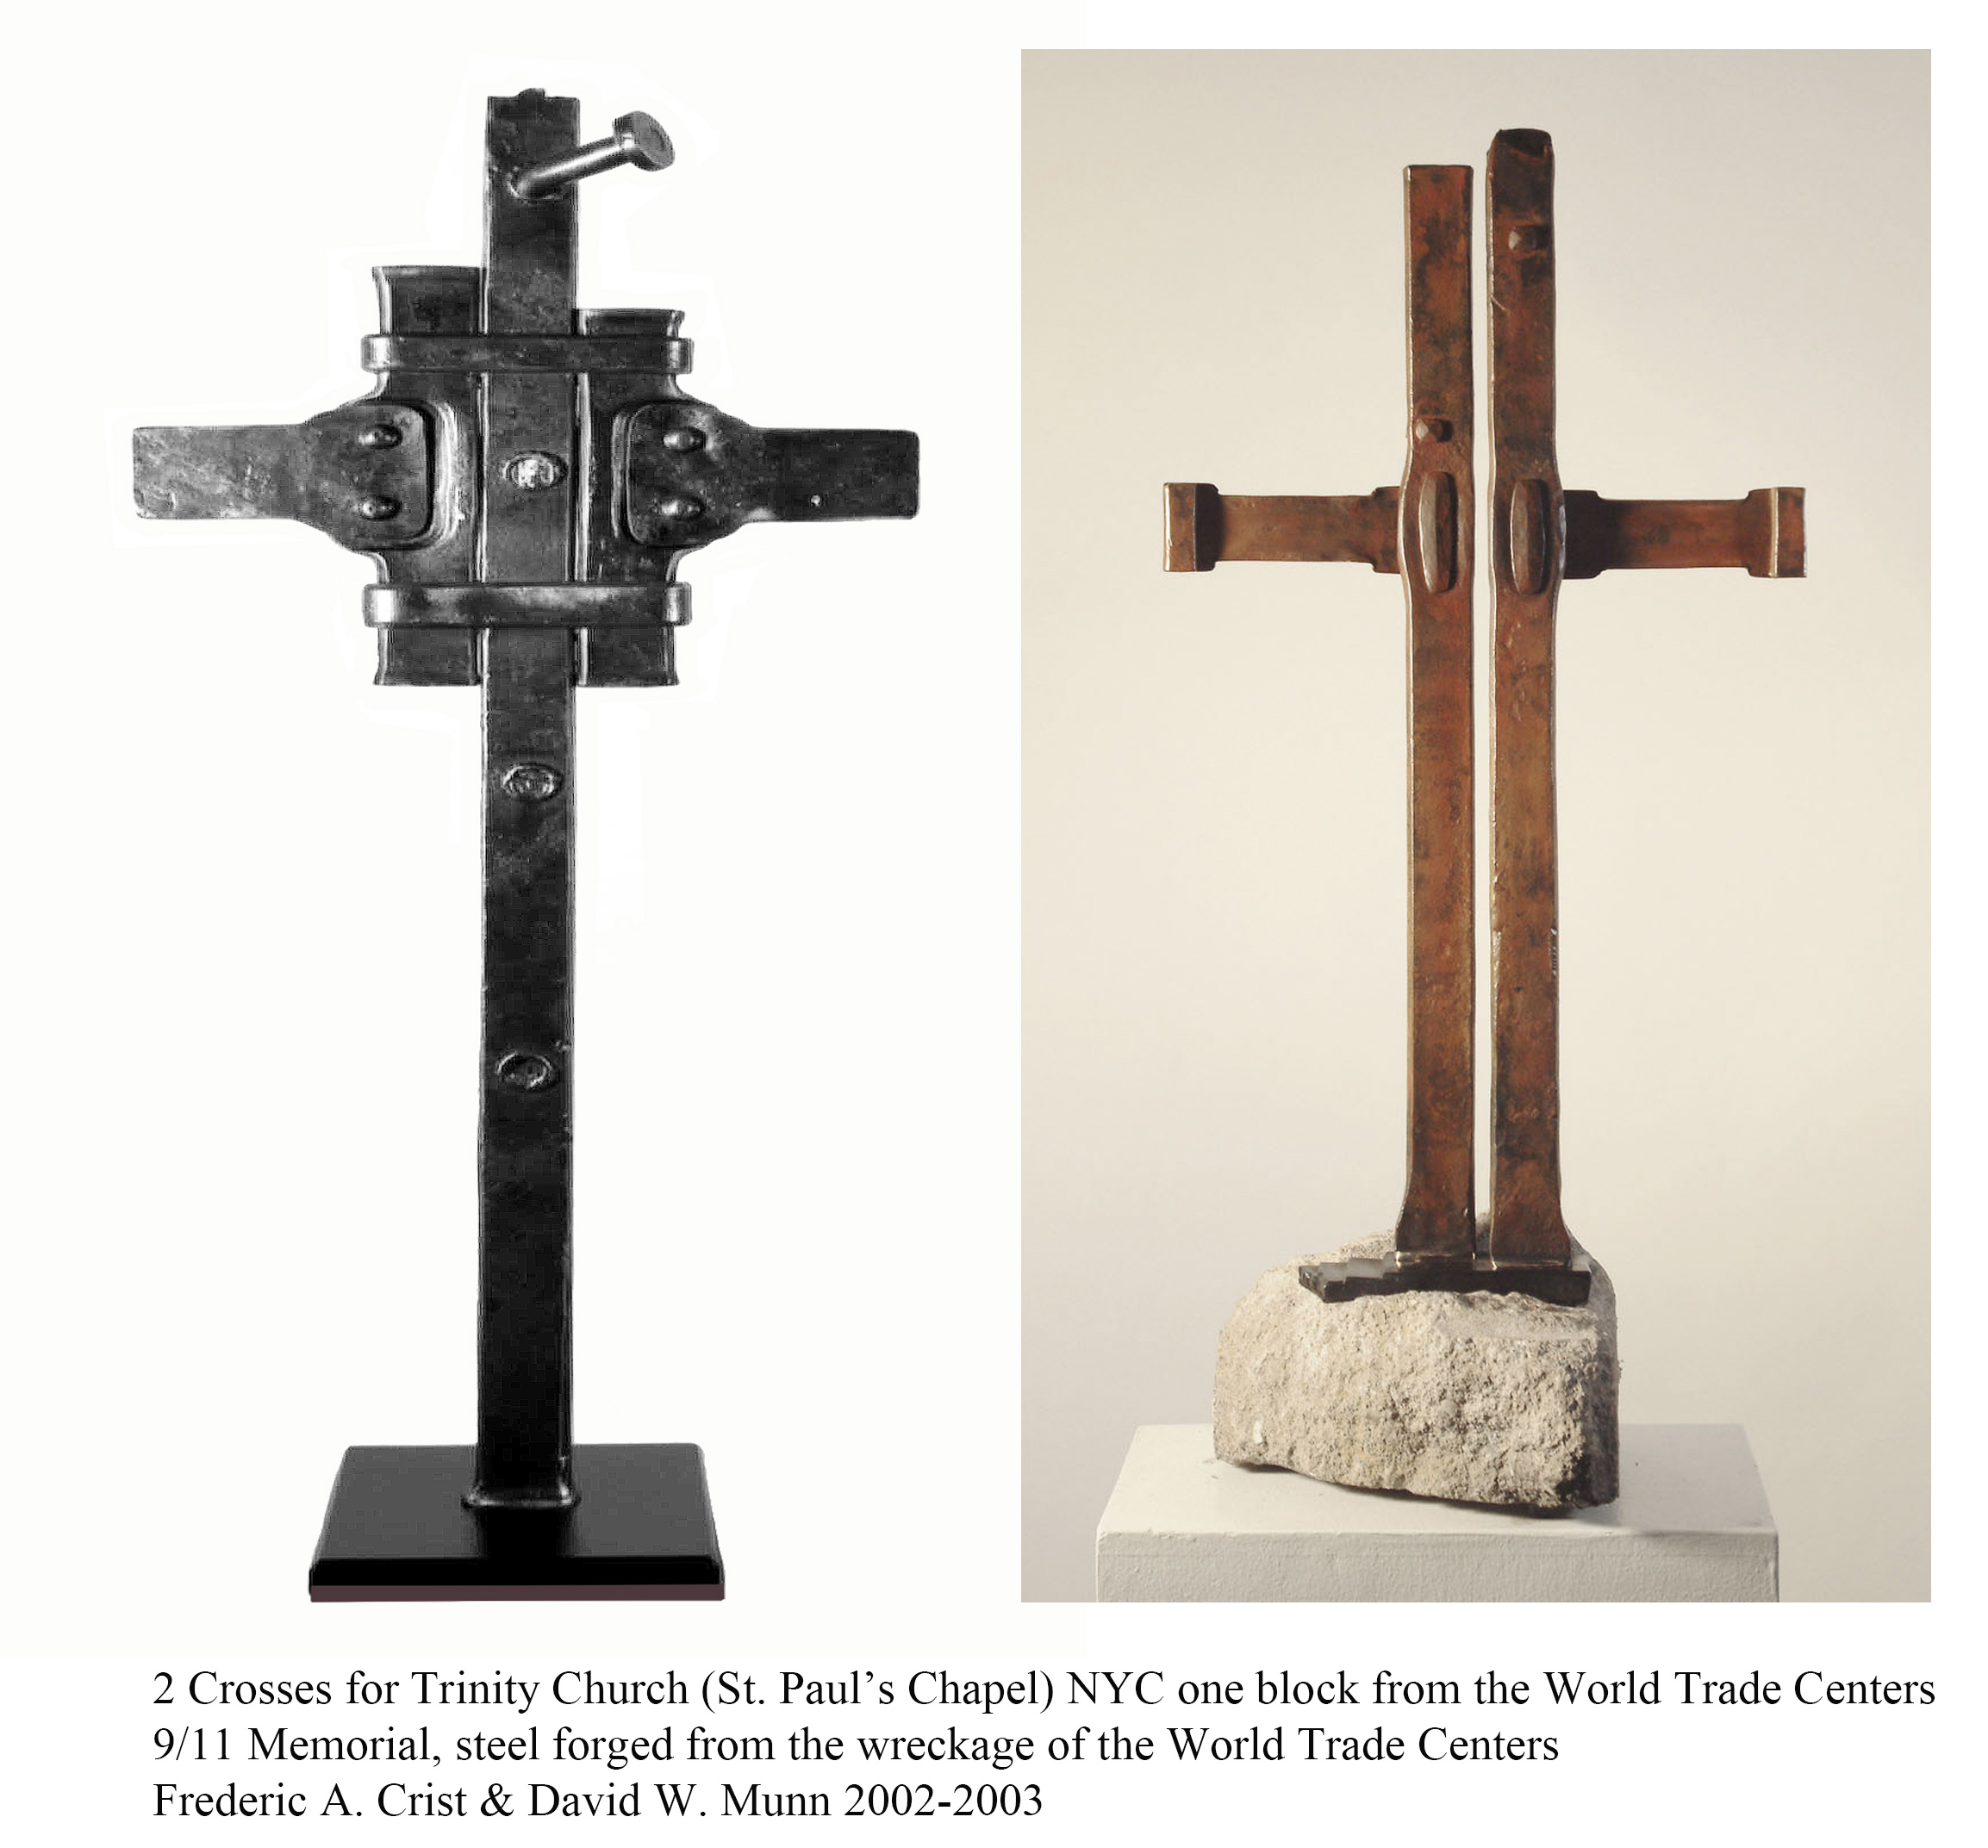 2 crosses for Trinity Church copy.jpg